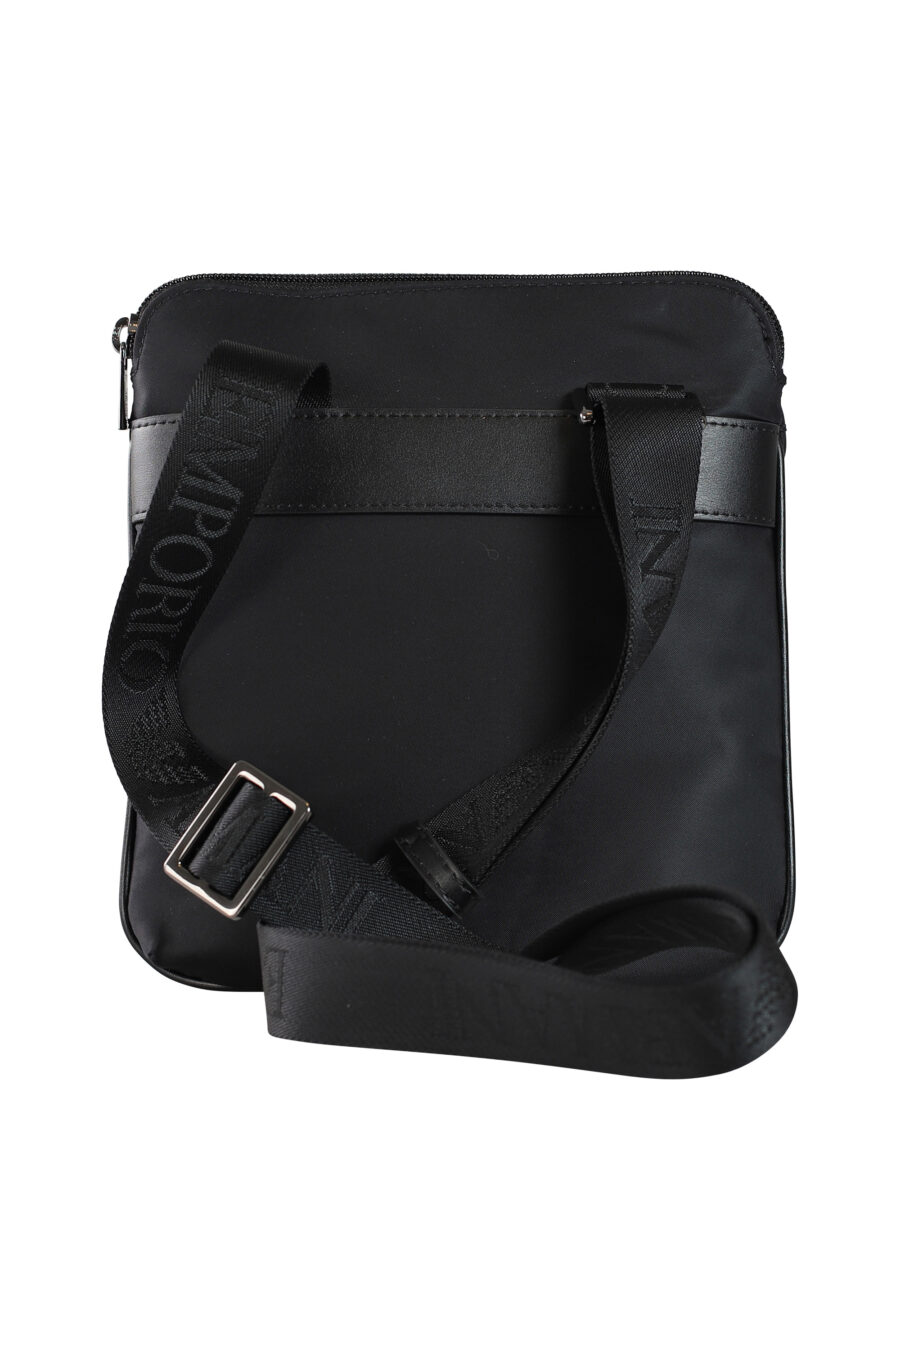 Black shoulder bag with metal mini logo - 8053616709593 3